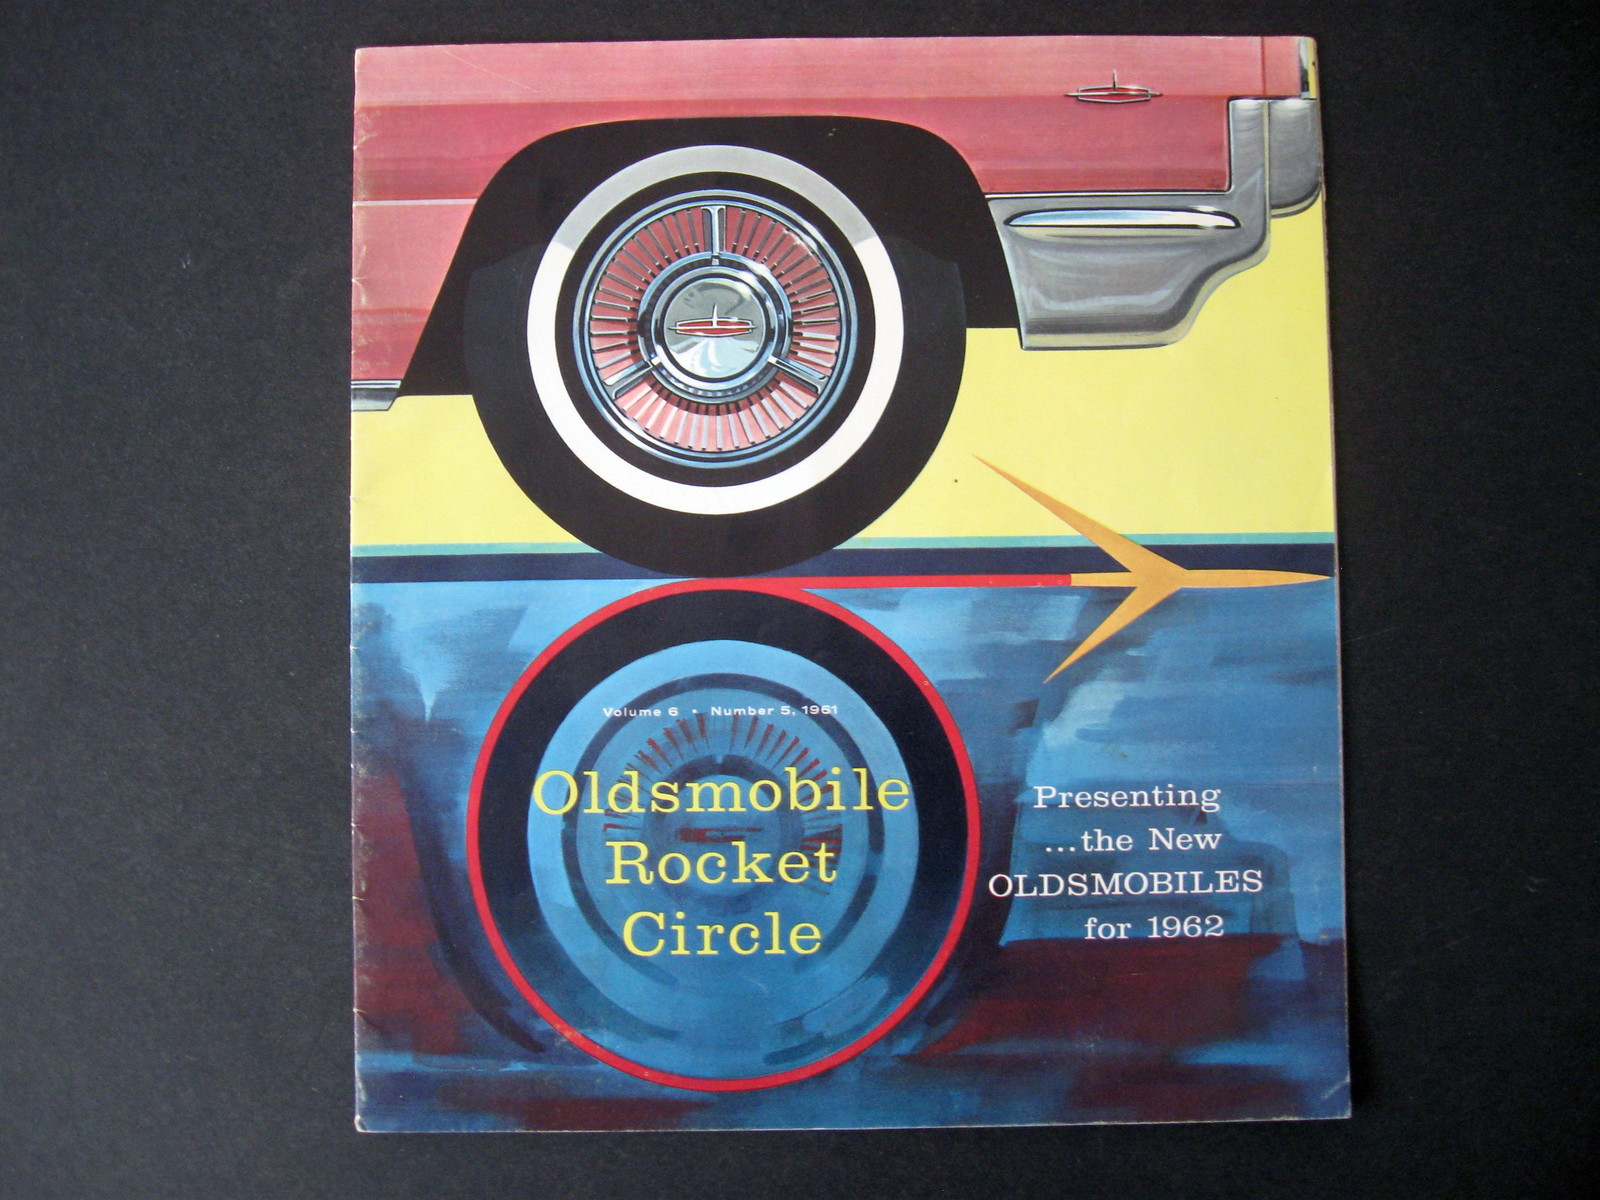 1961 Oldsmobile Rocket Circle Sales Brochure Presenting New 1962 Oldsmobiles  - $24.99